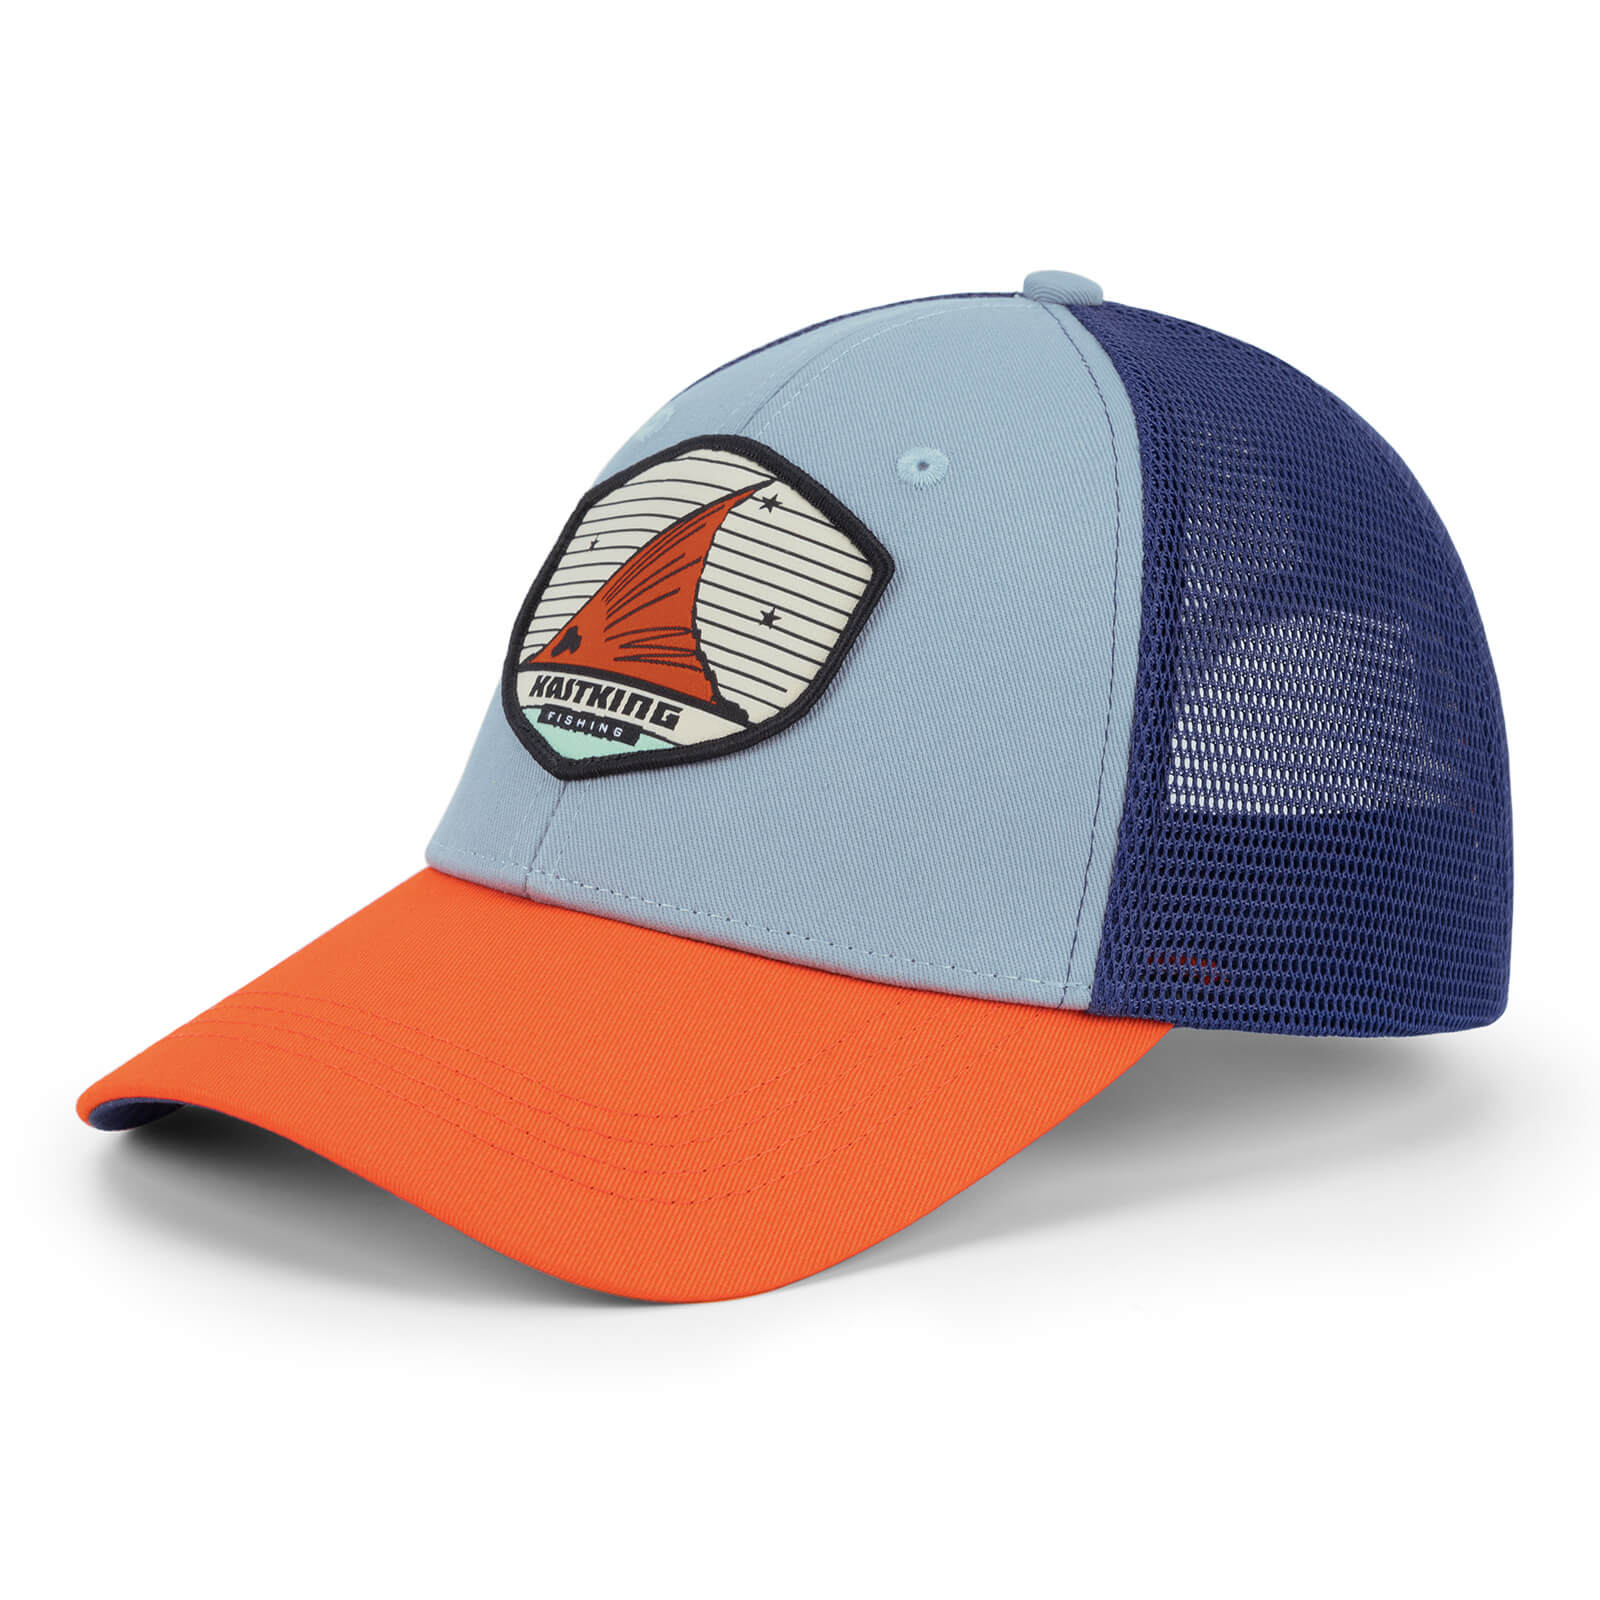 SCALES Gear Fishing Cap Hat Blue Snapback Adjustable